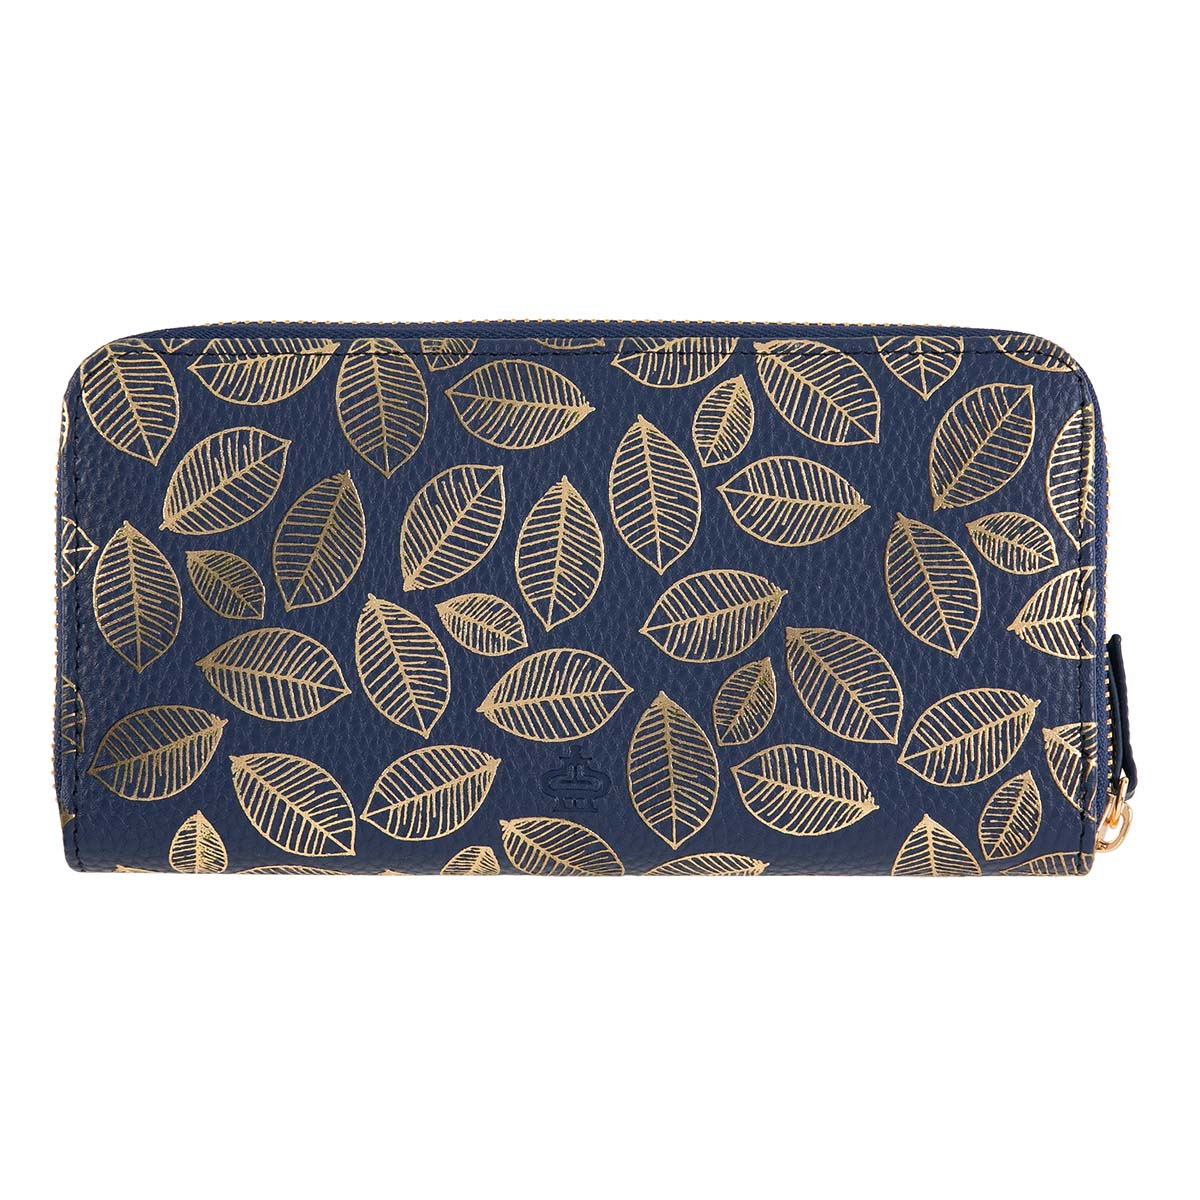 Grand portefeuille femme - feuilles dorées - bleu marine